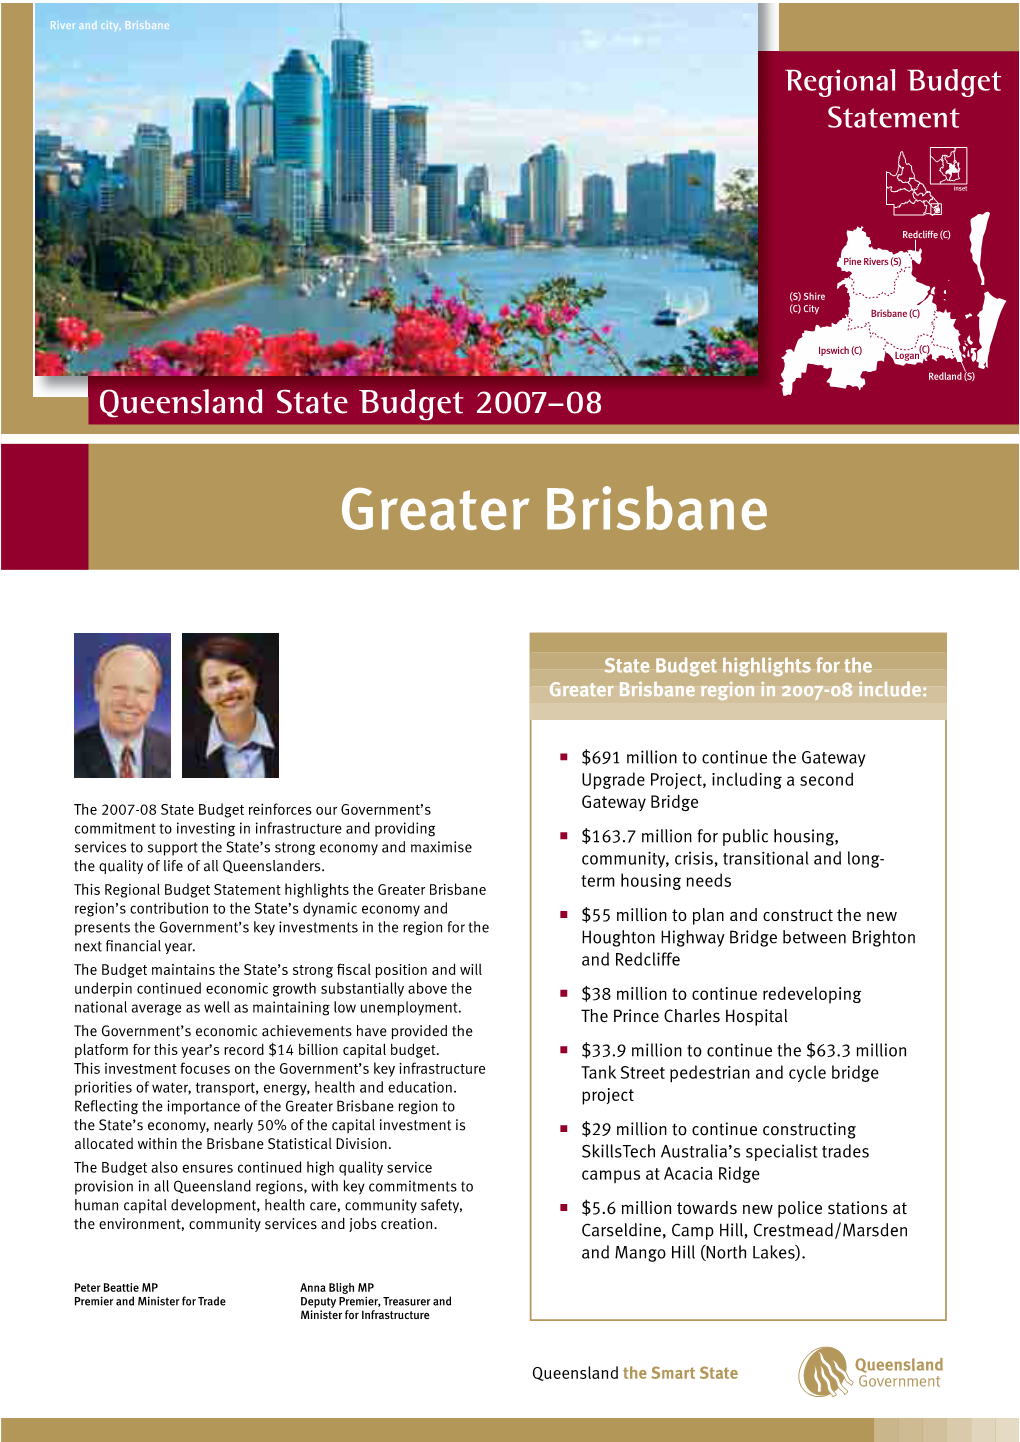 Greater Brisbane